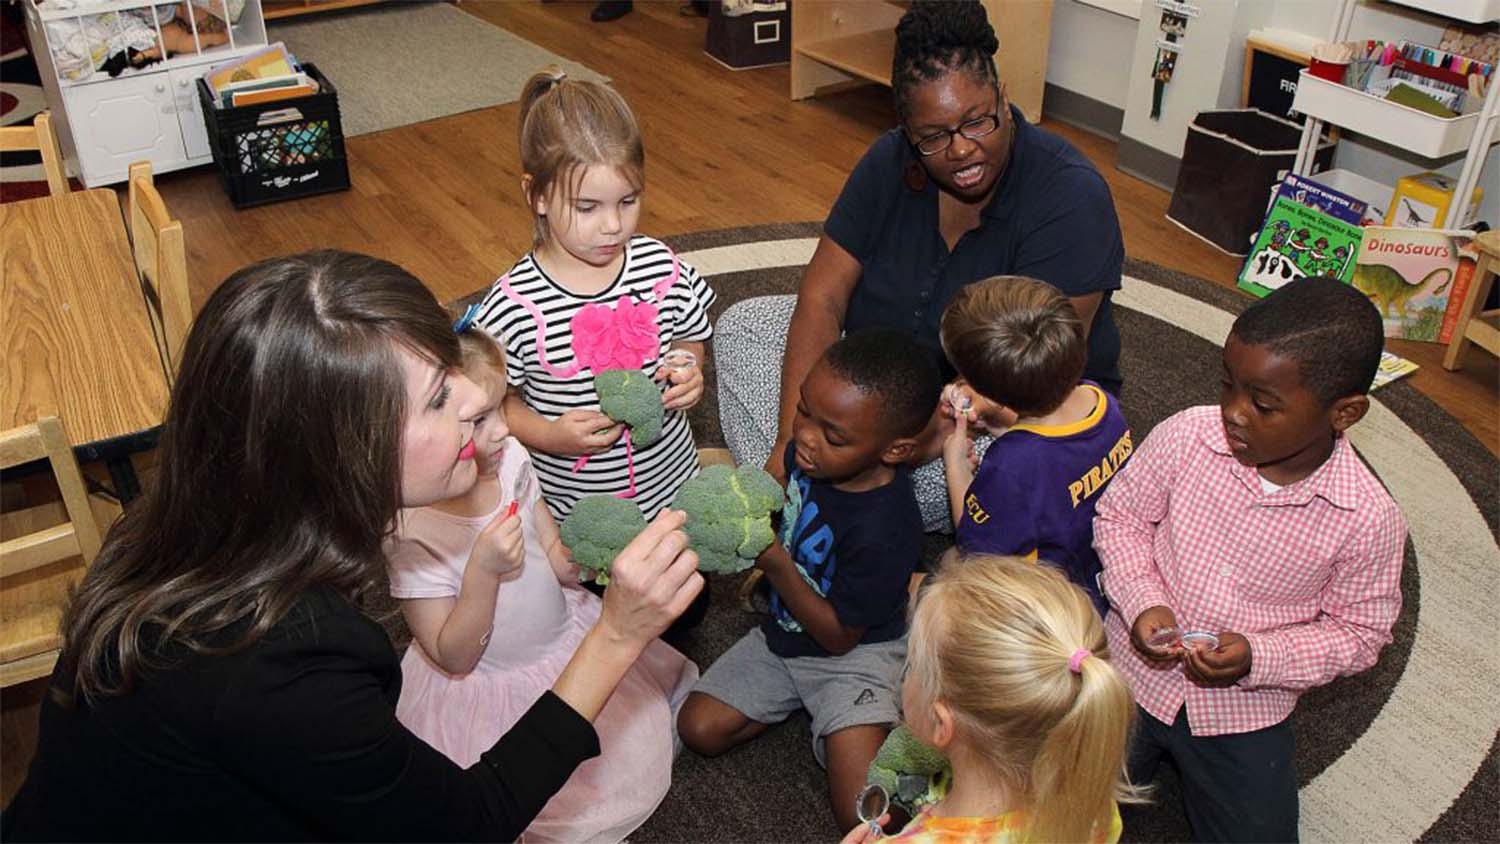 White woman showing broccoli to preschool children